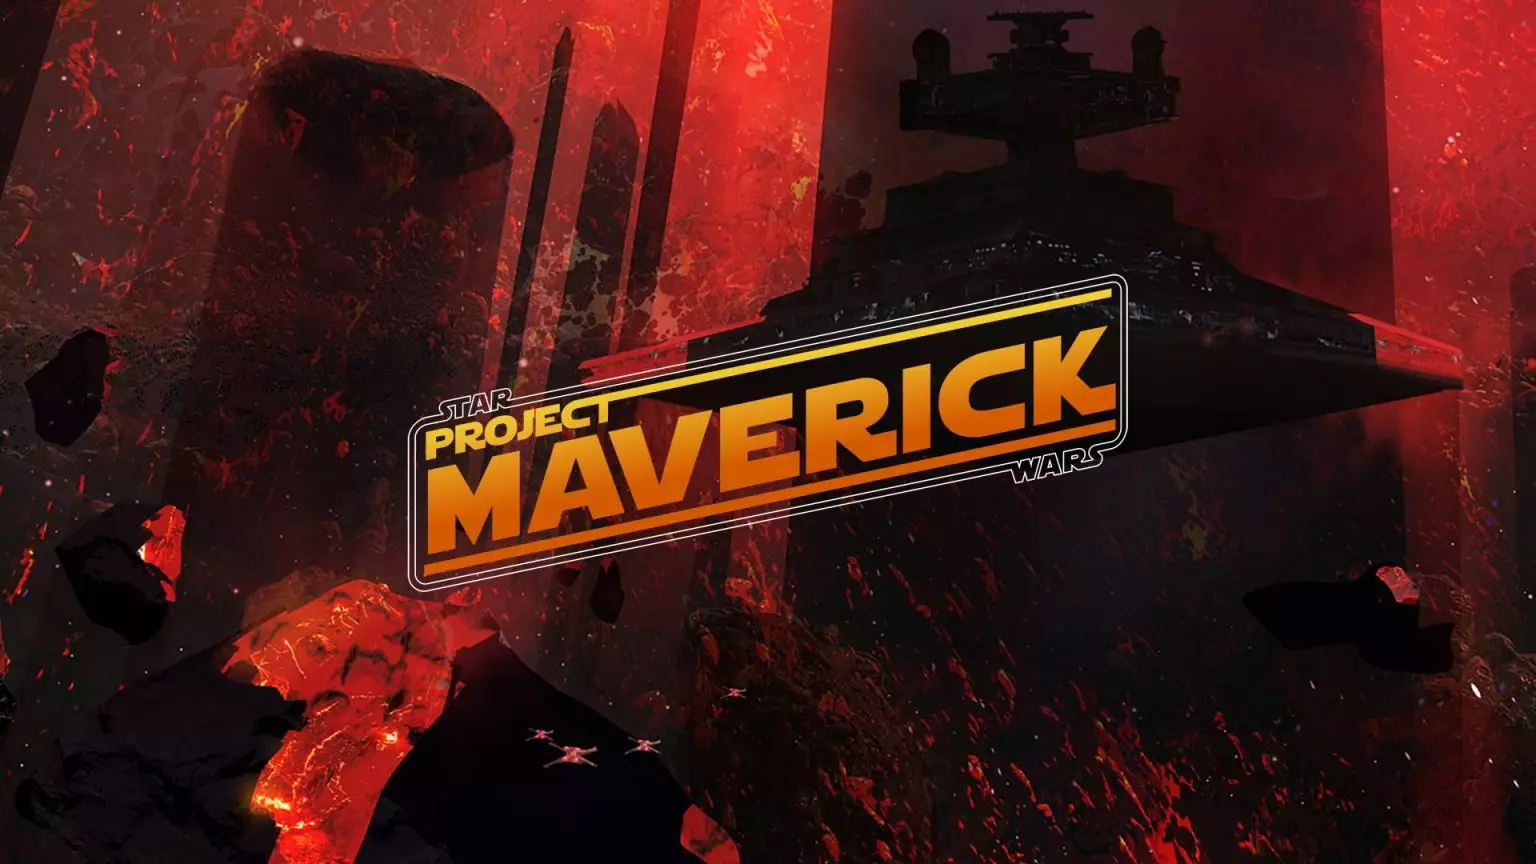 'Star Wars: Project Maverick' /